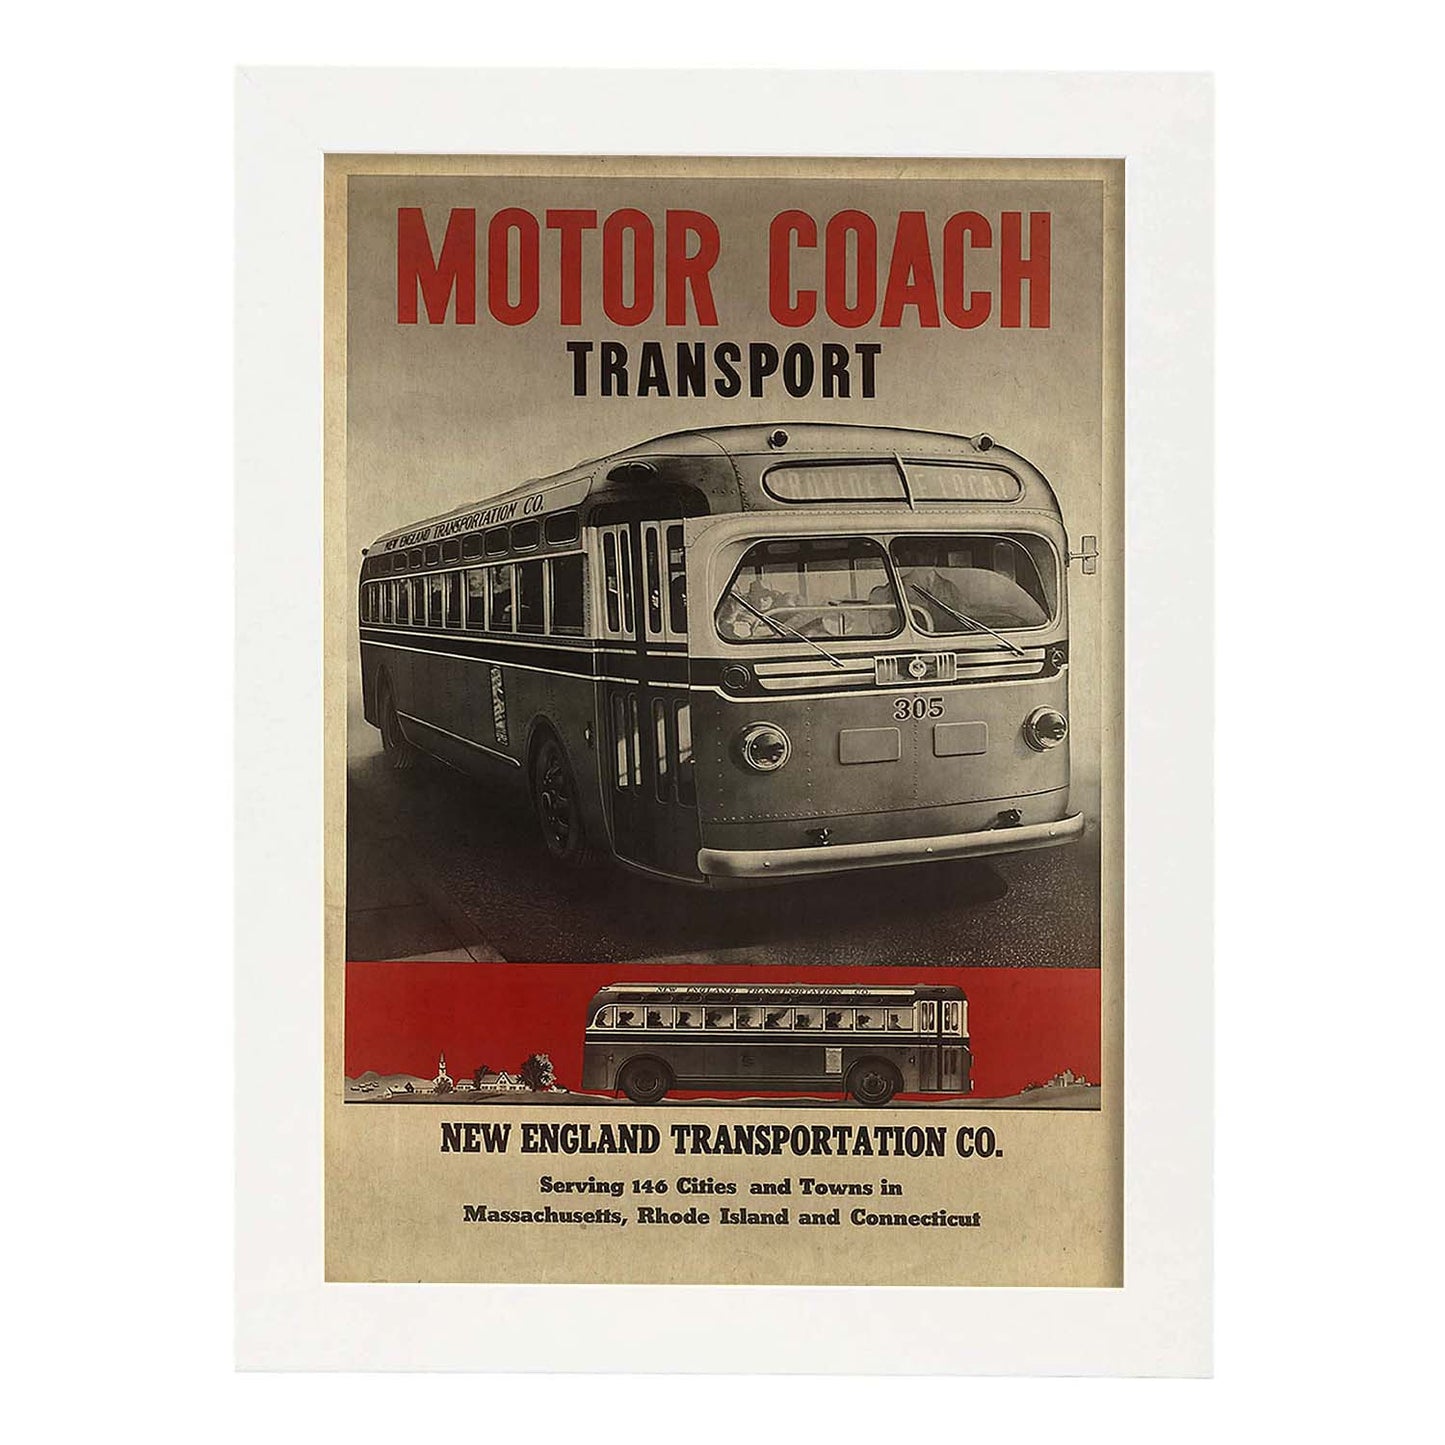 Poster vintage. Cartel vintage Motor Coach Transport de 1940.-Artwork-Nacnic-A4-Marco Blanco-Nacnic Estudio SL